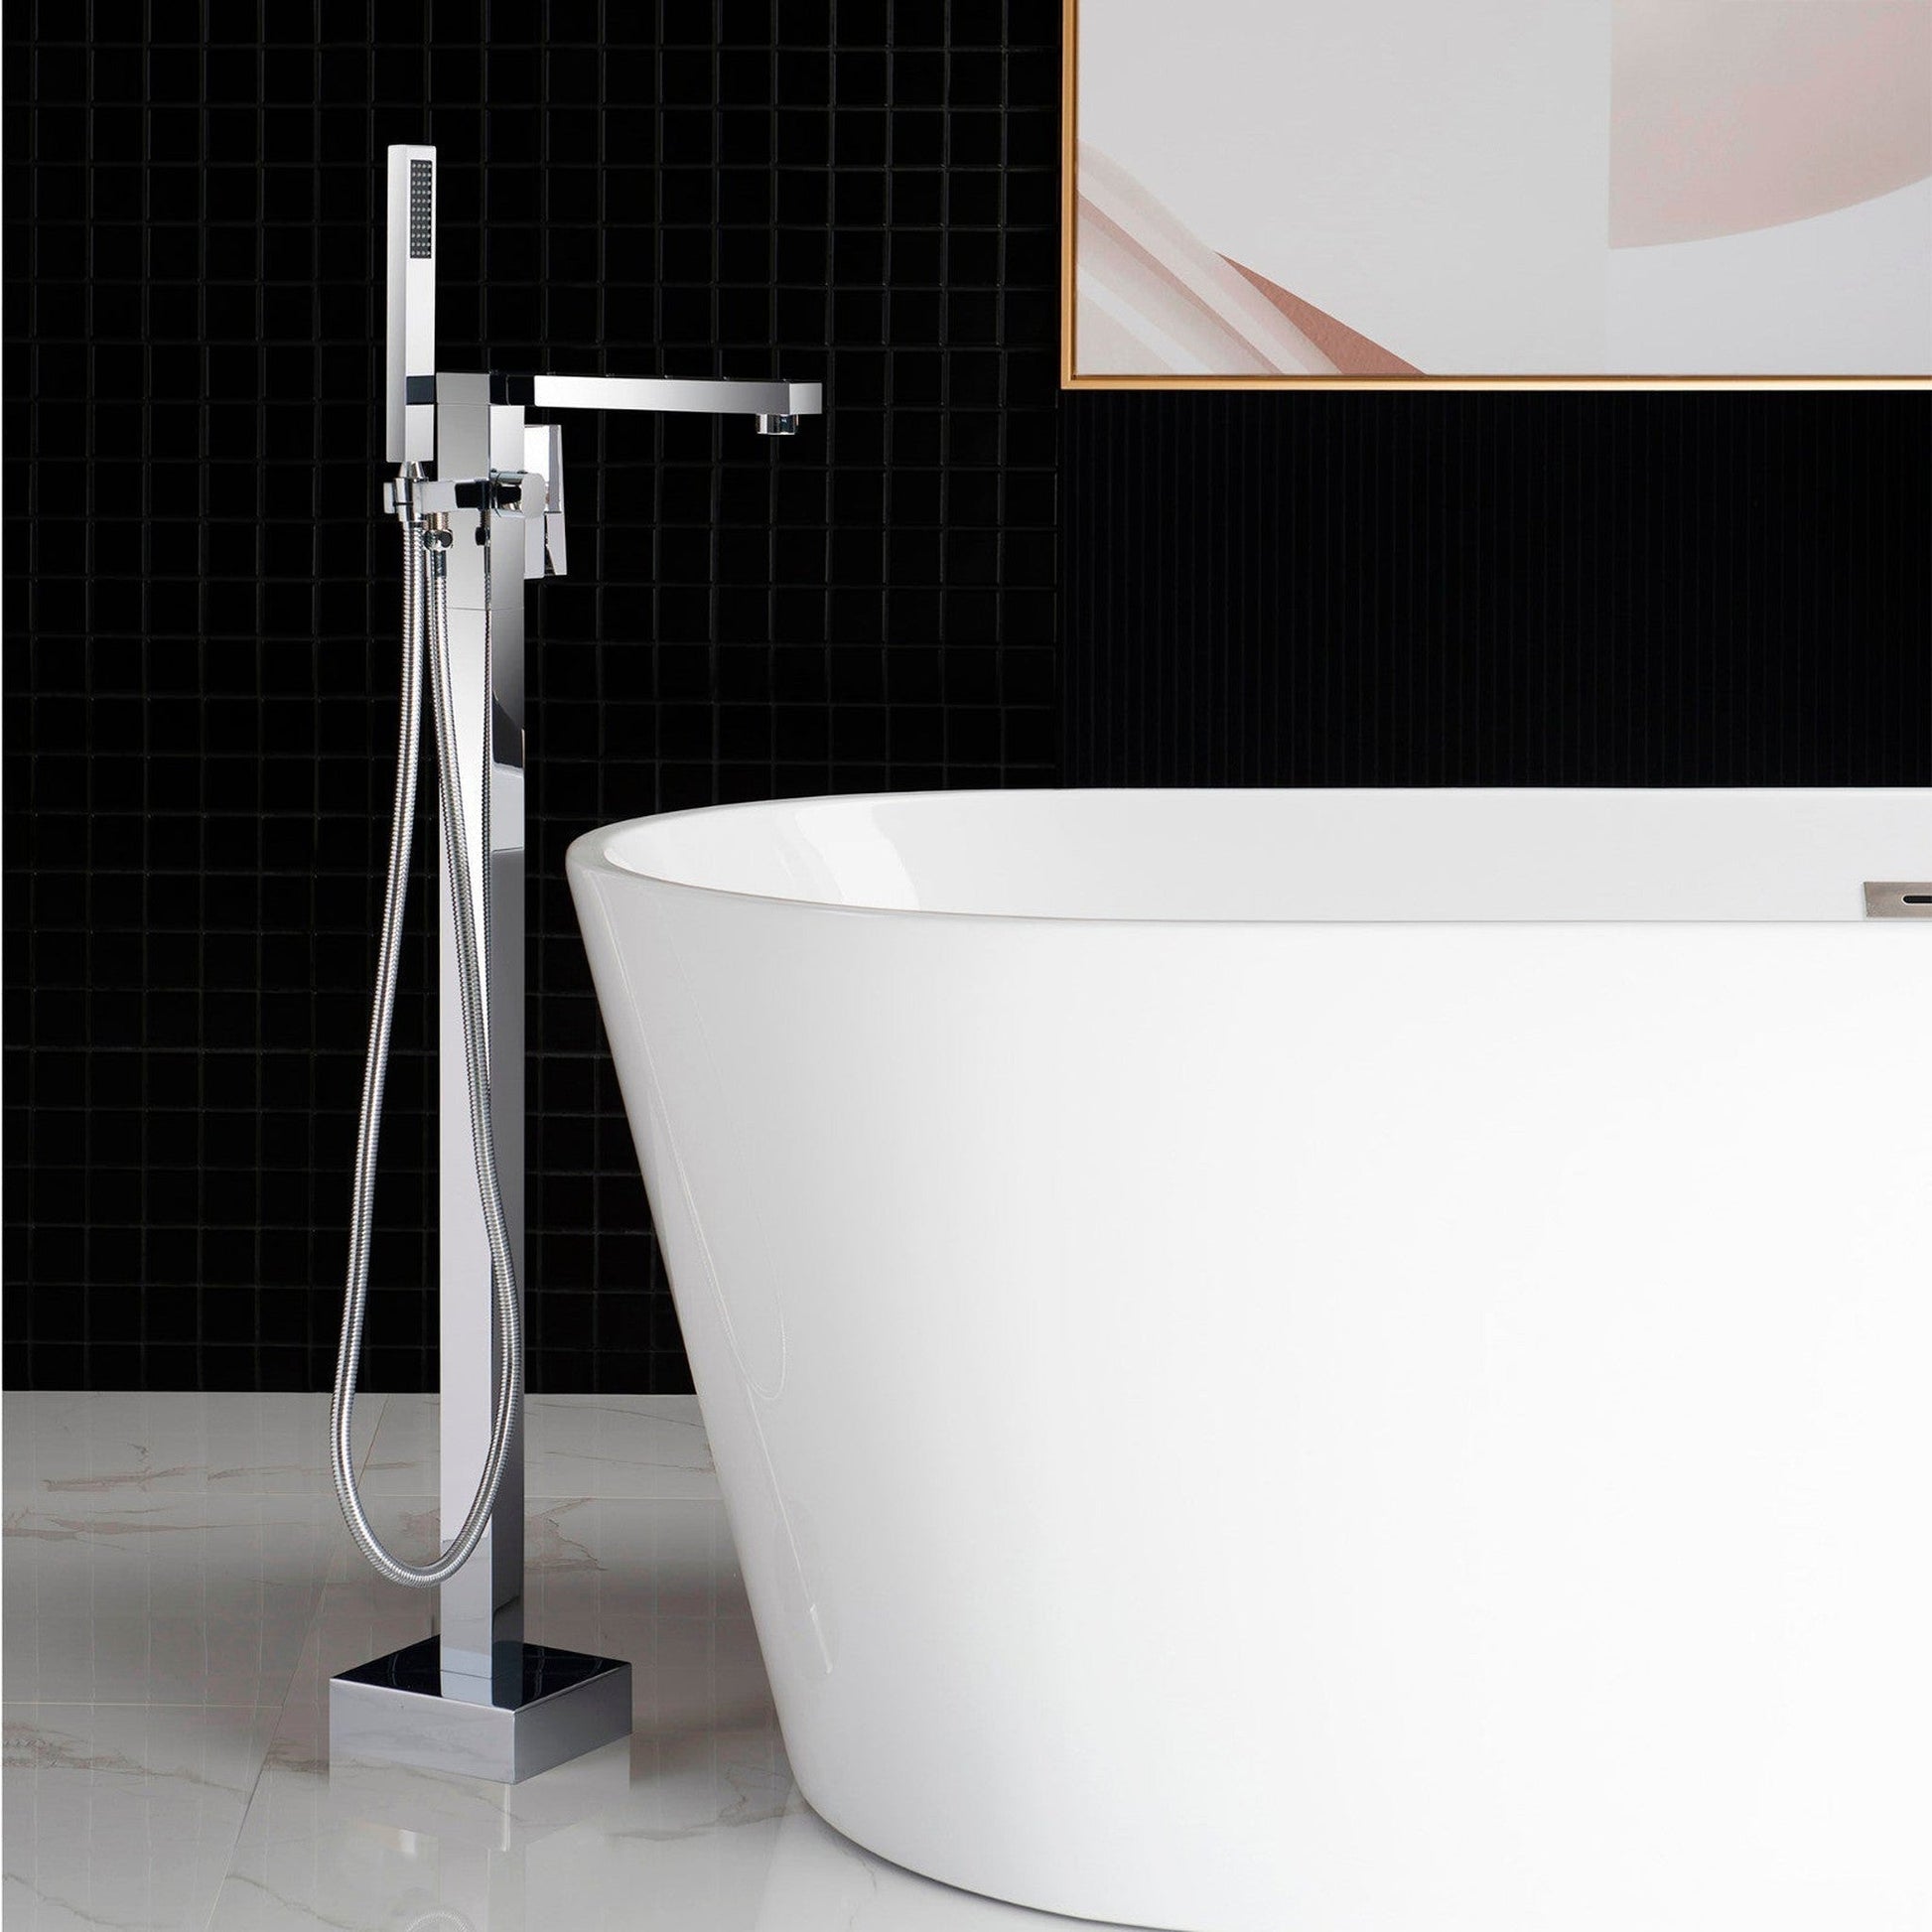 WoodBridge B1702 54" White Acrylic Freestanding Soaking Bathtub With Chrome Drain, Overflow, F-0004 Tub Filler and Caddy Tray